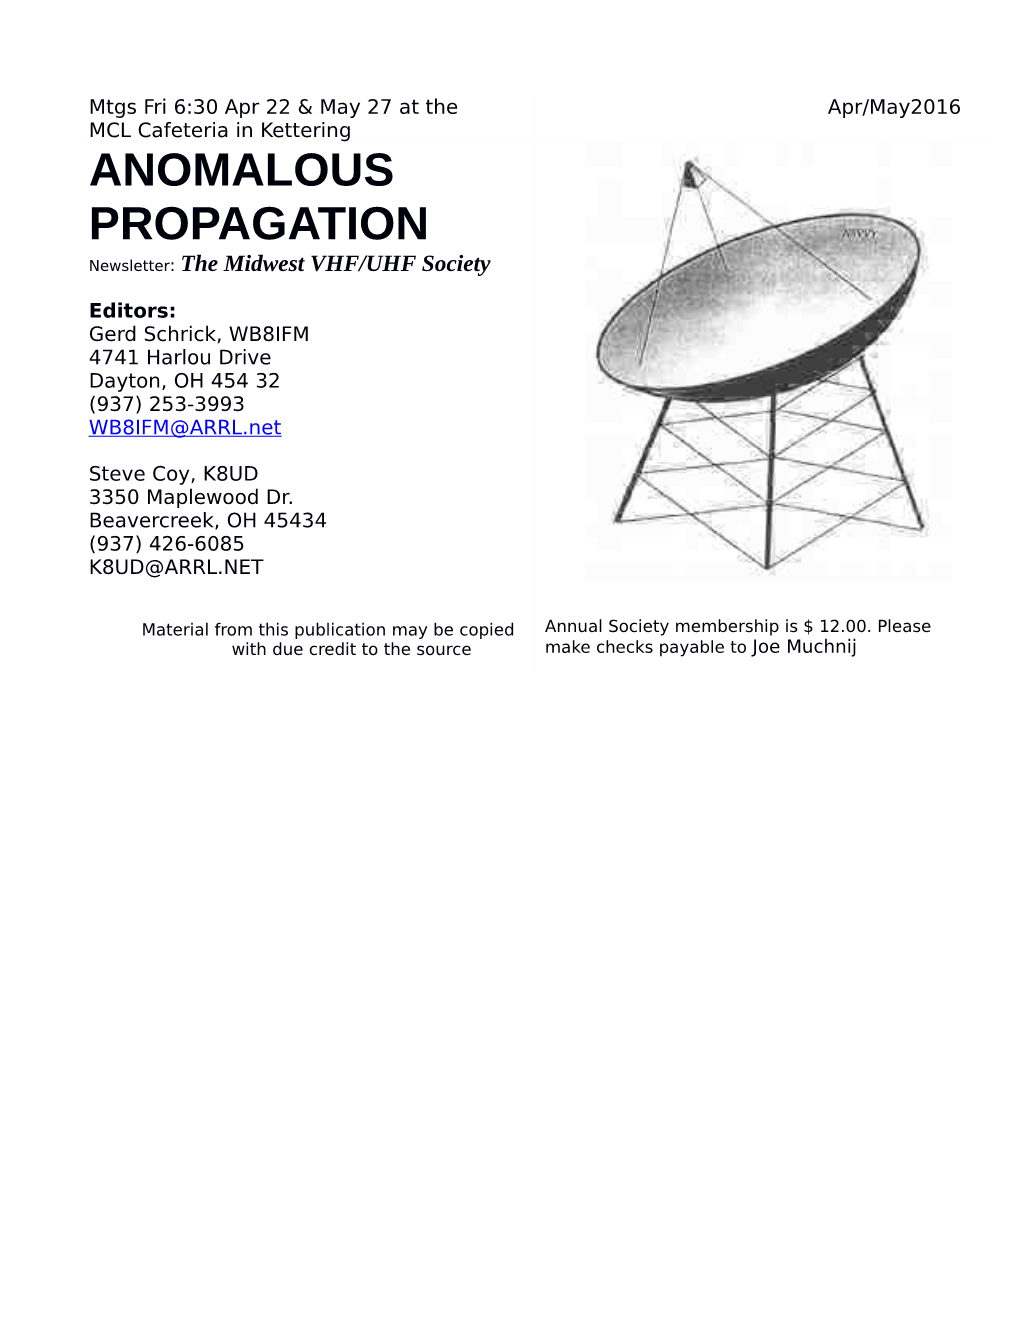 ANOMALOUS PROPAGATION Newsletter: the Midwest VHF/UHF Society